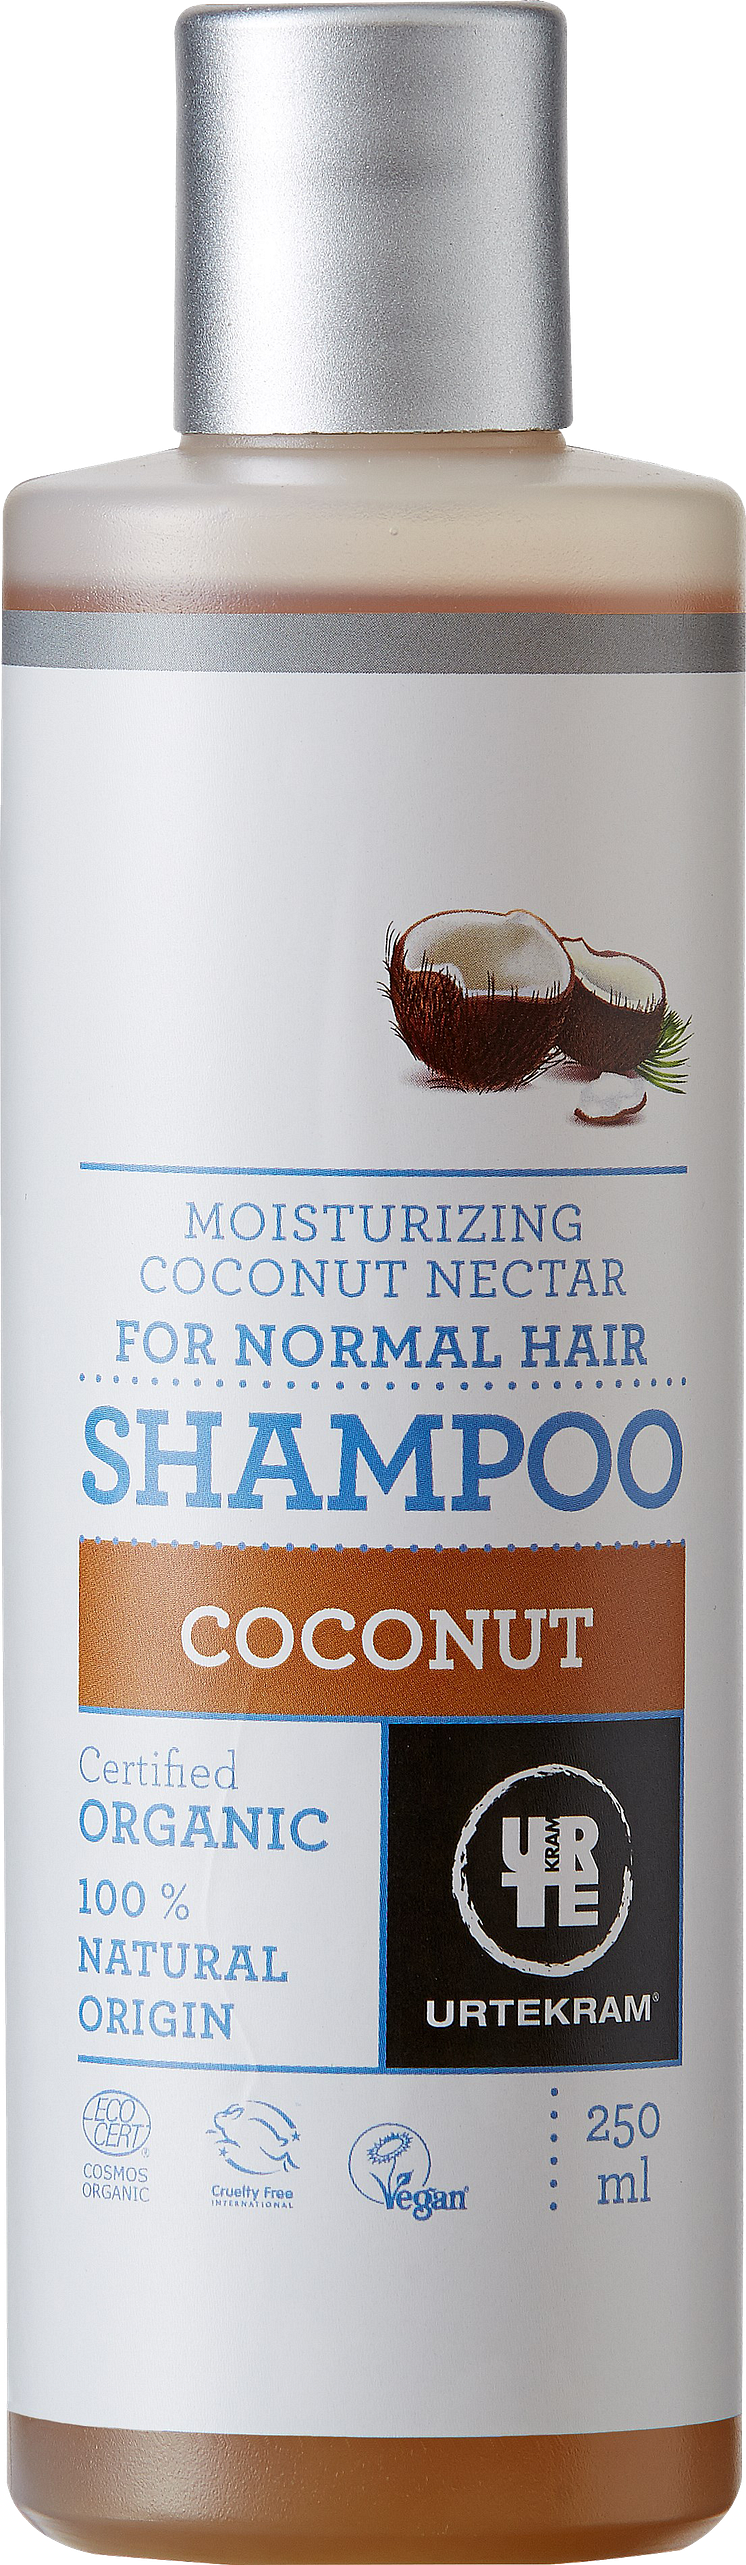 Urtekram kokos shampoo